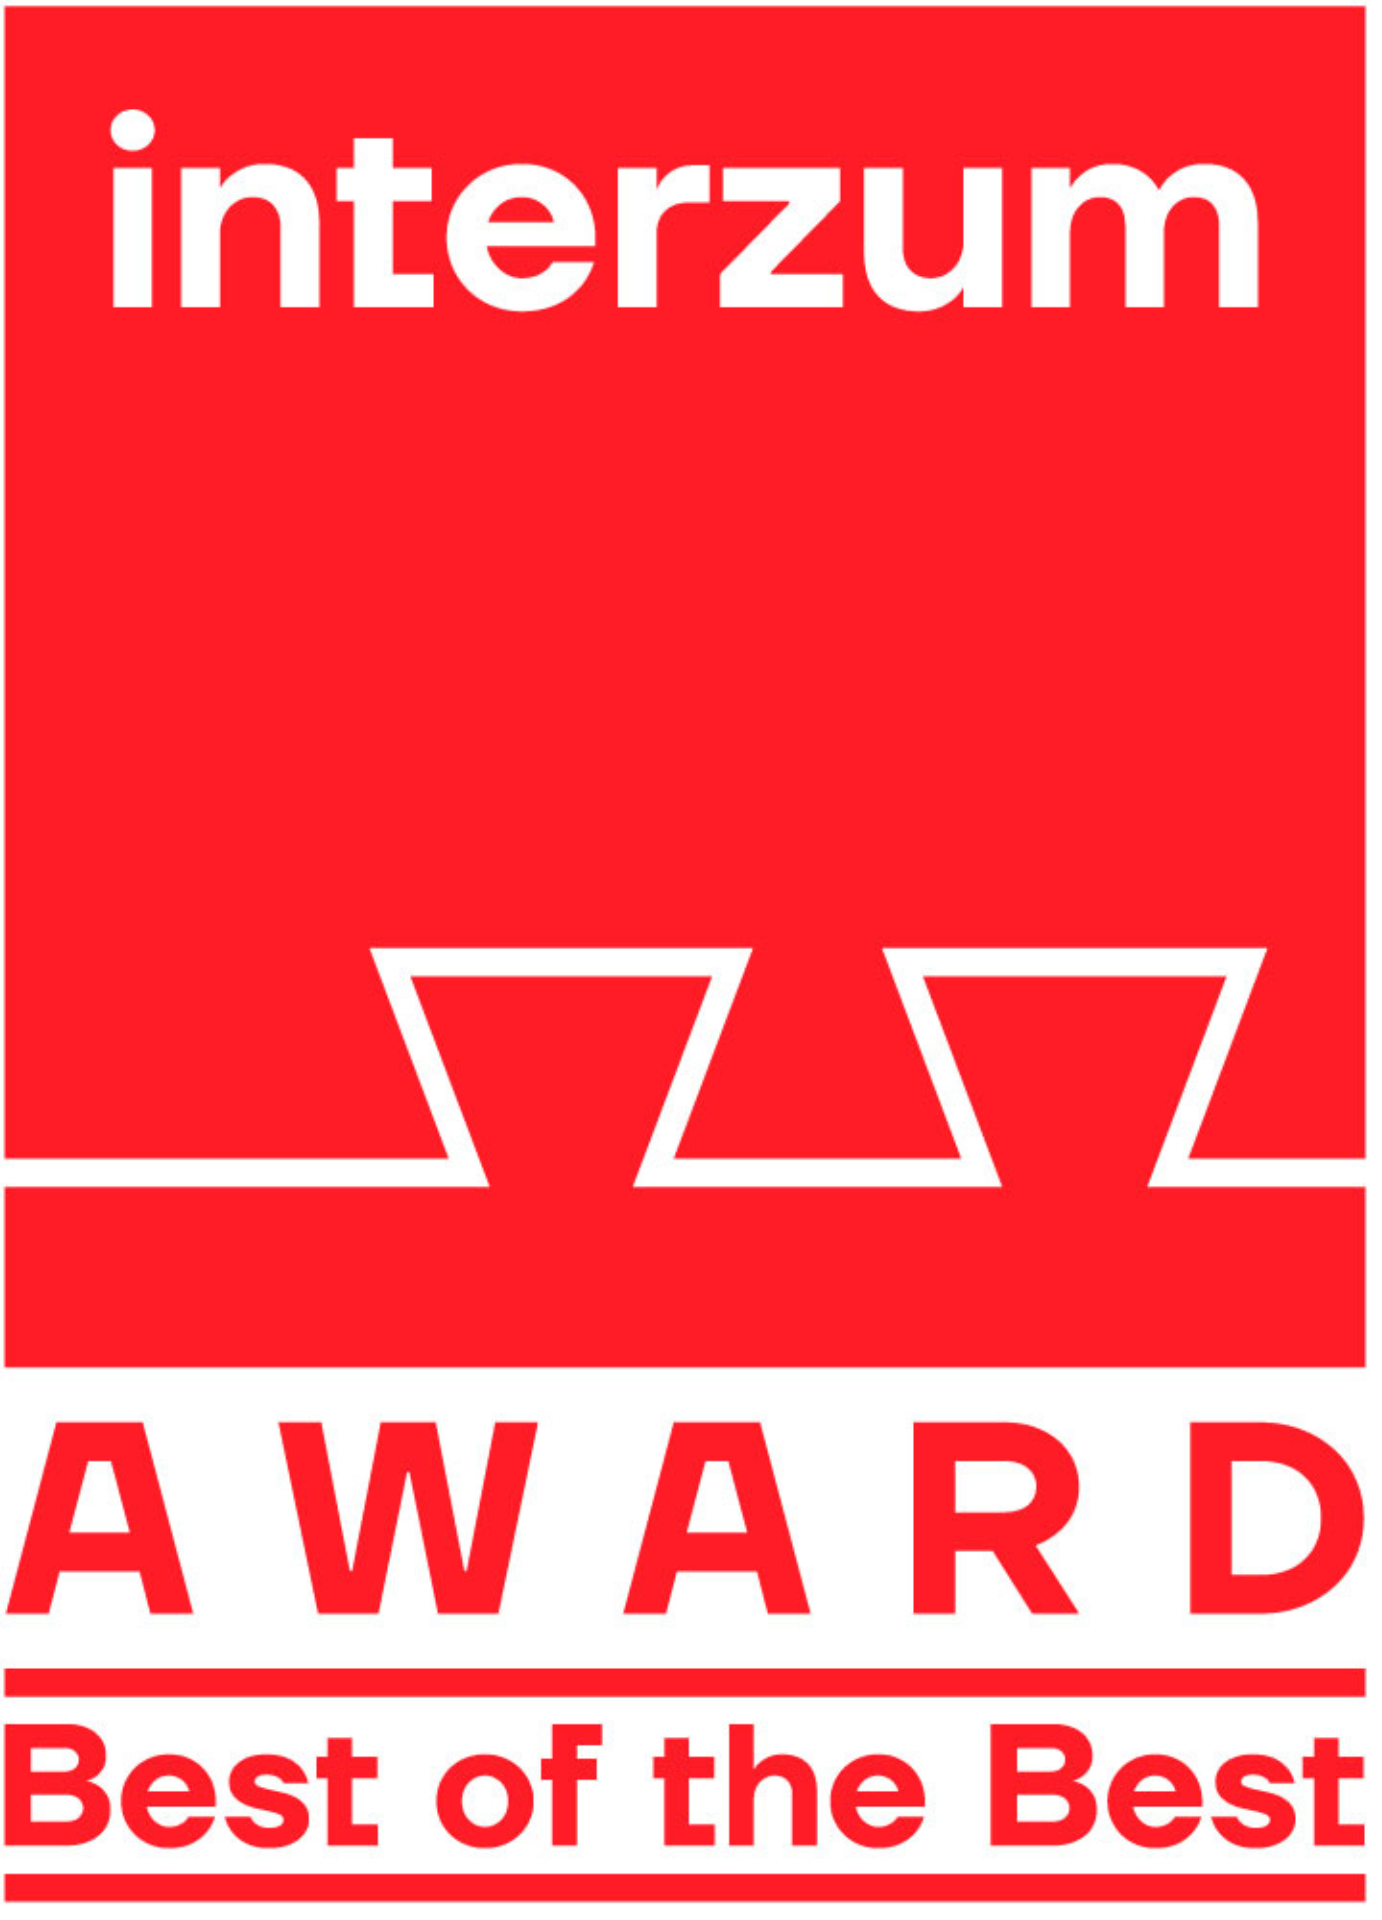 Best of the best Award logo